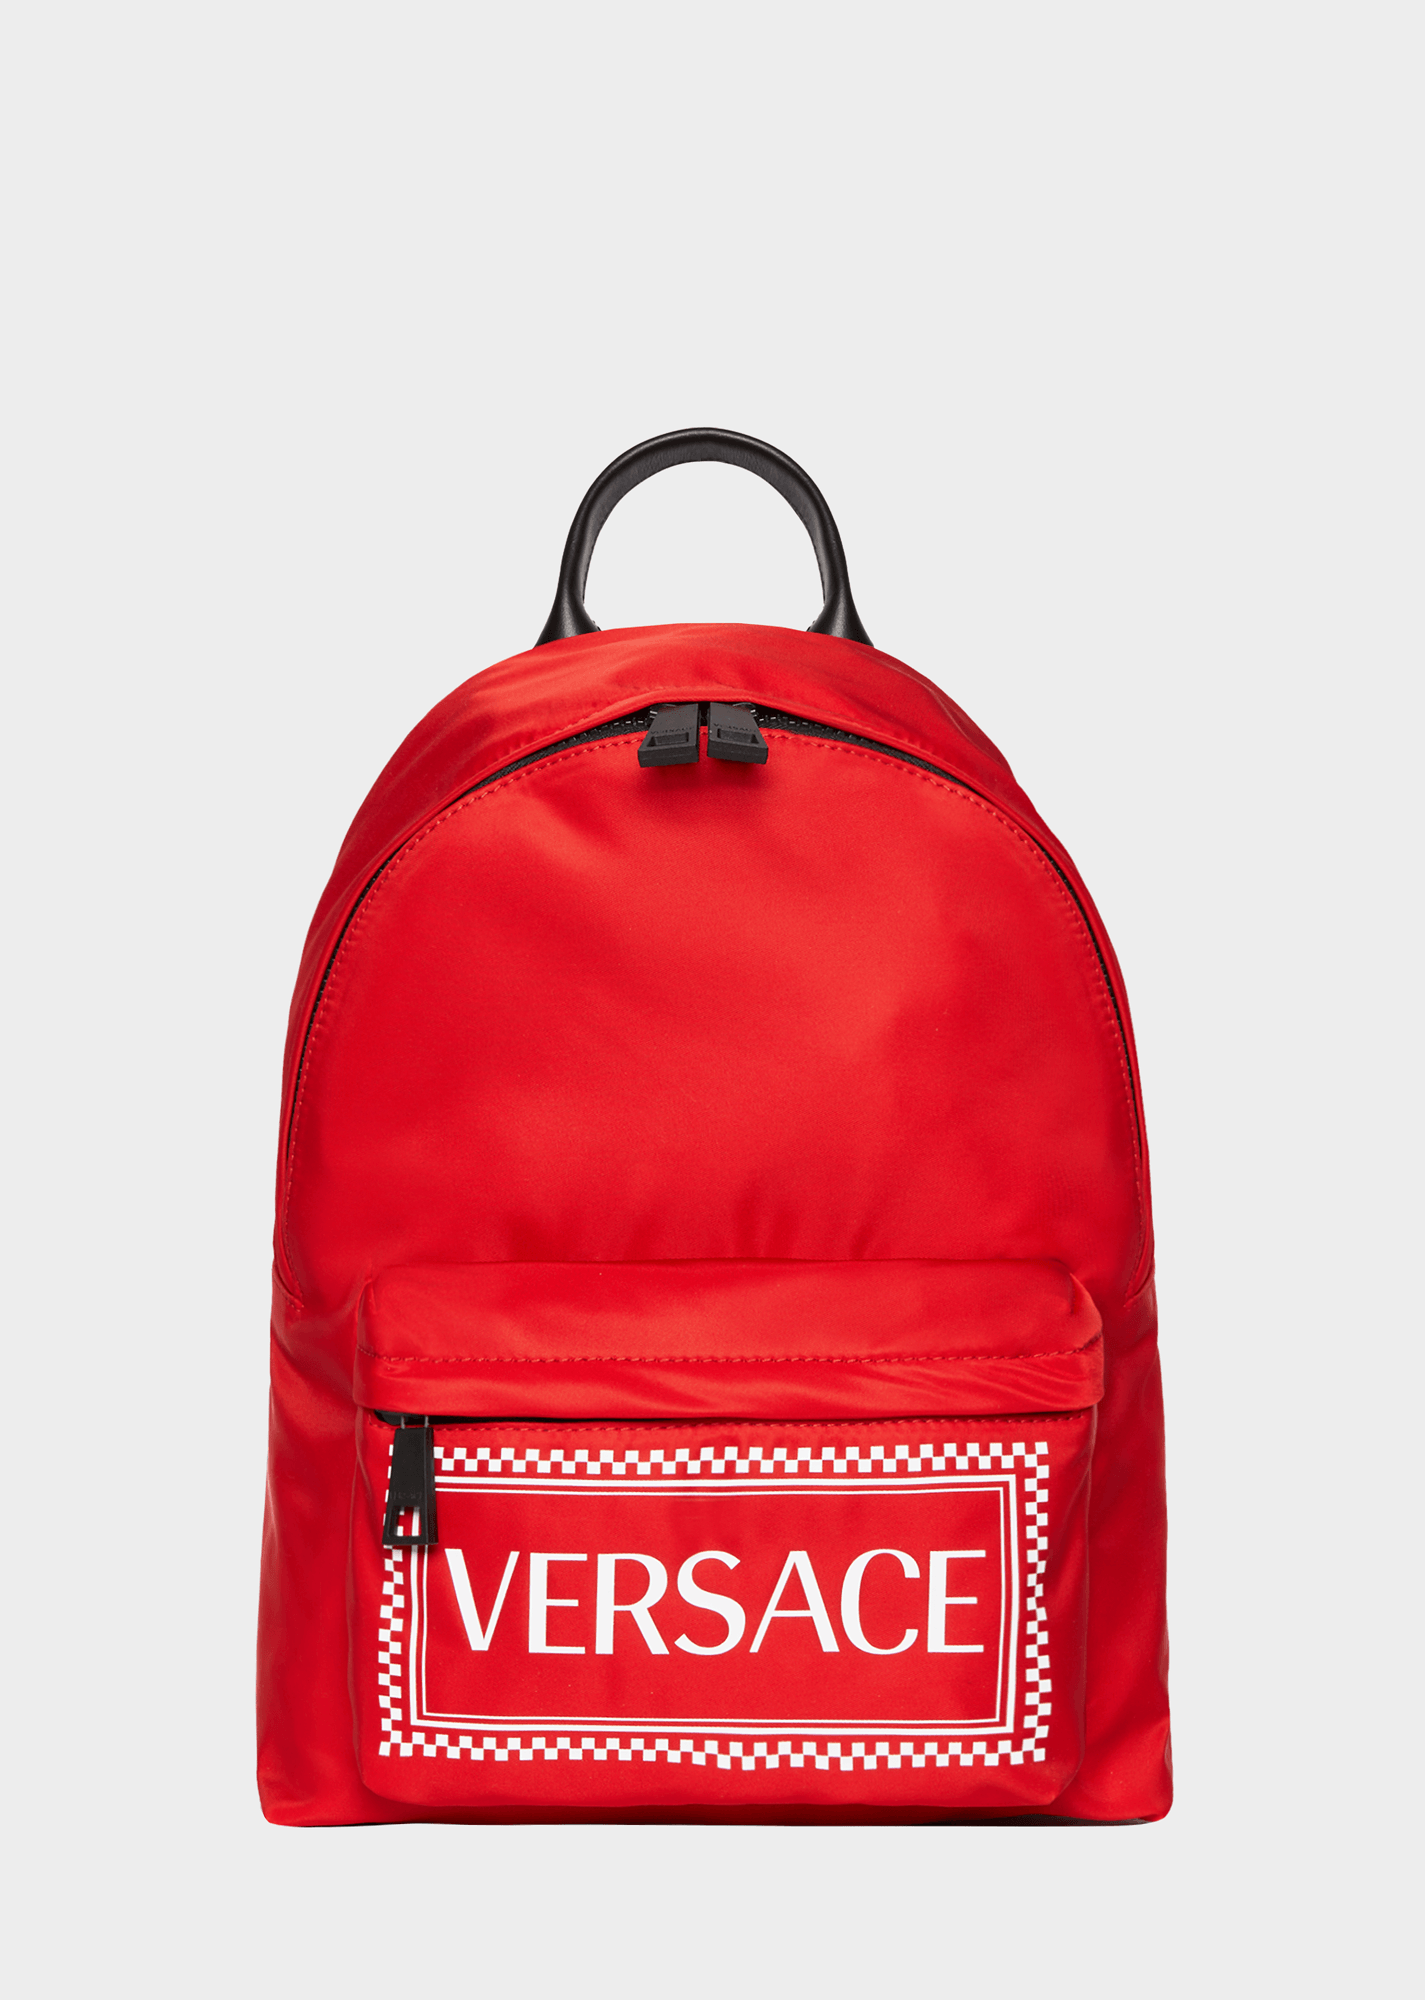 Two Red Women Logo - Versace 90s Vintage Logo Backpack for Women | UK Online Store